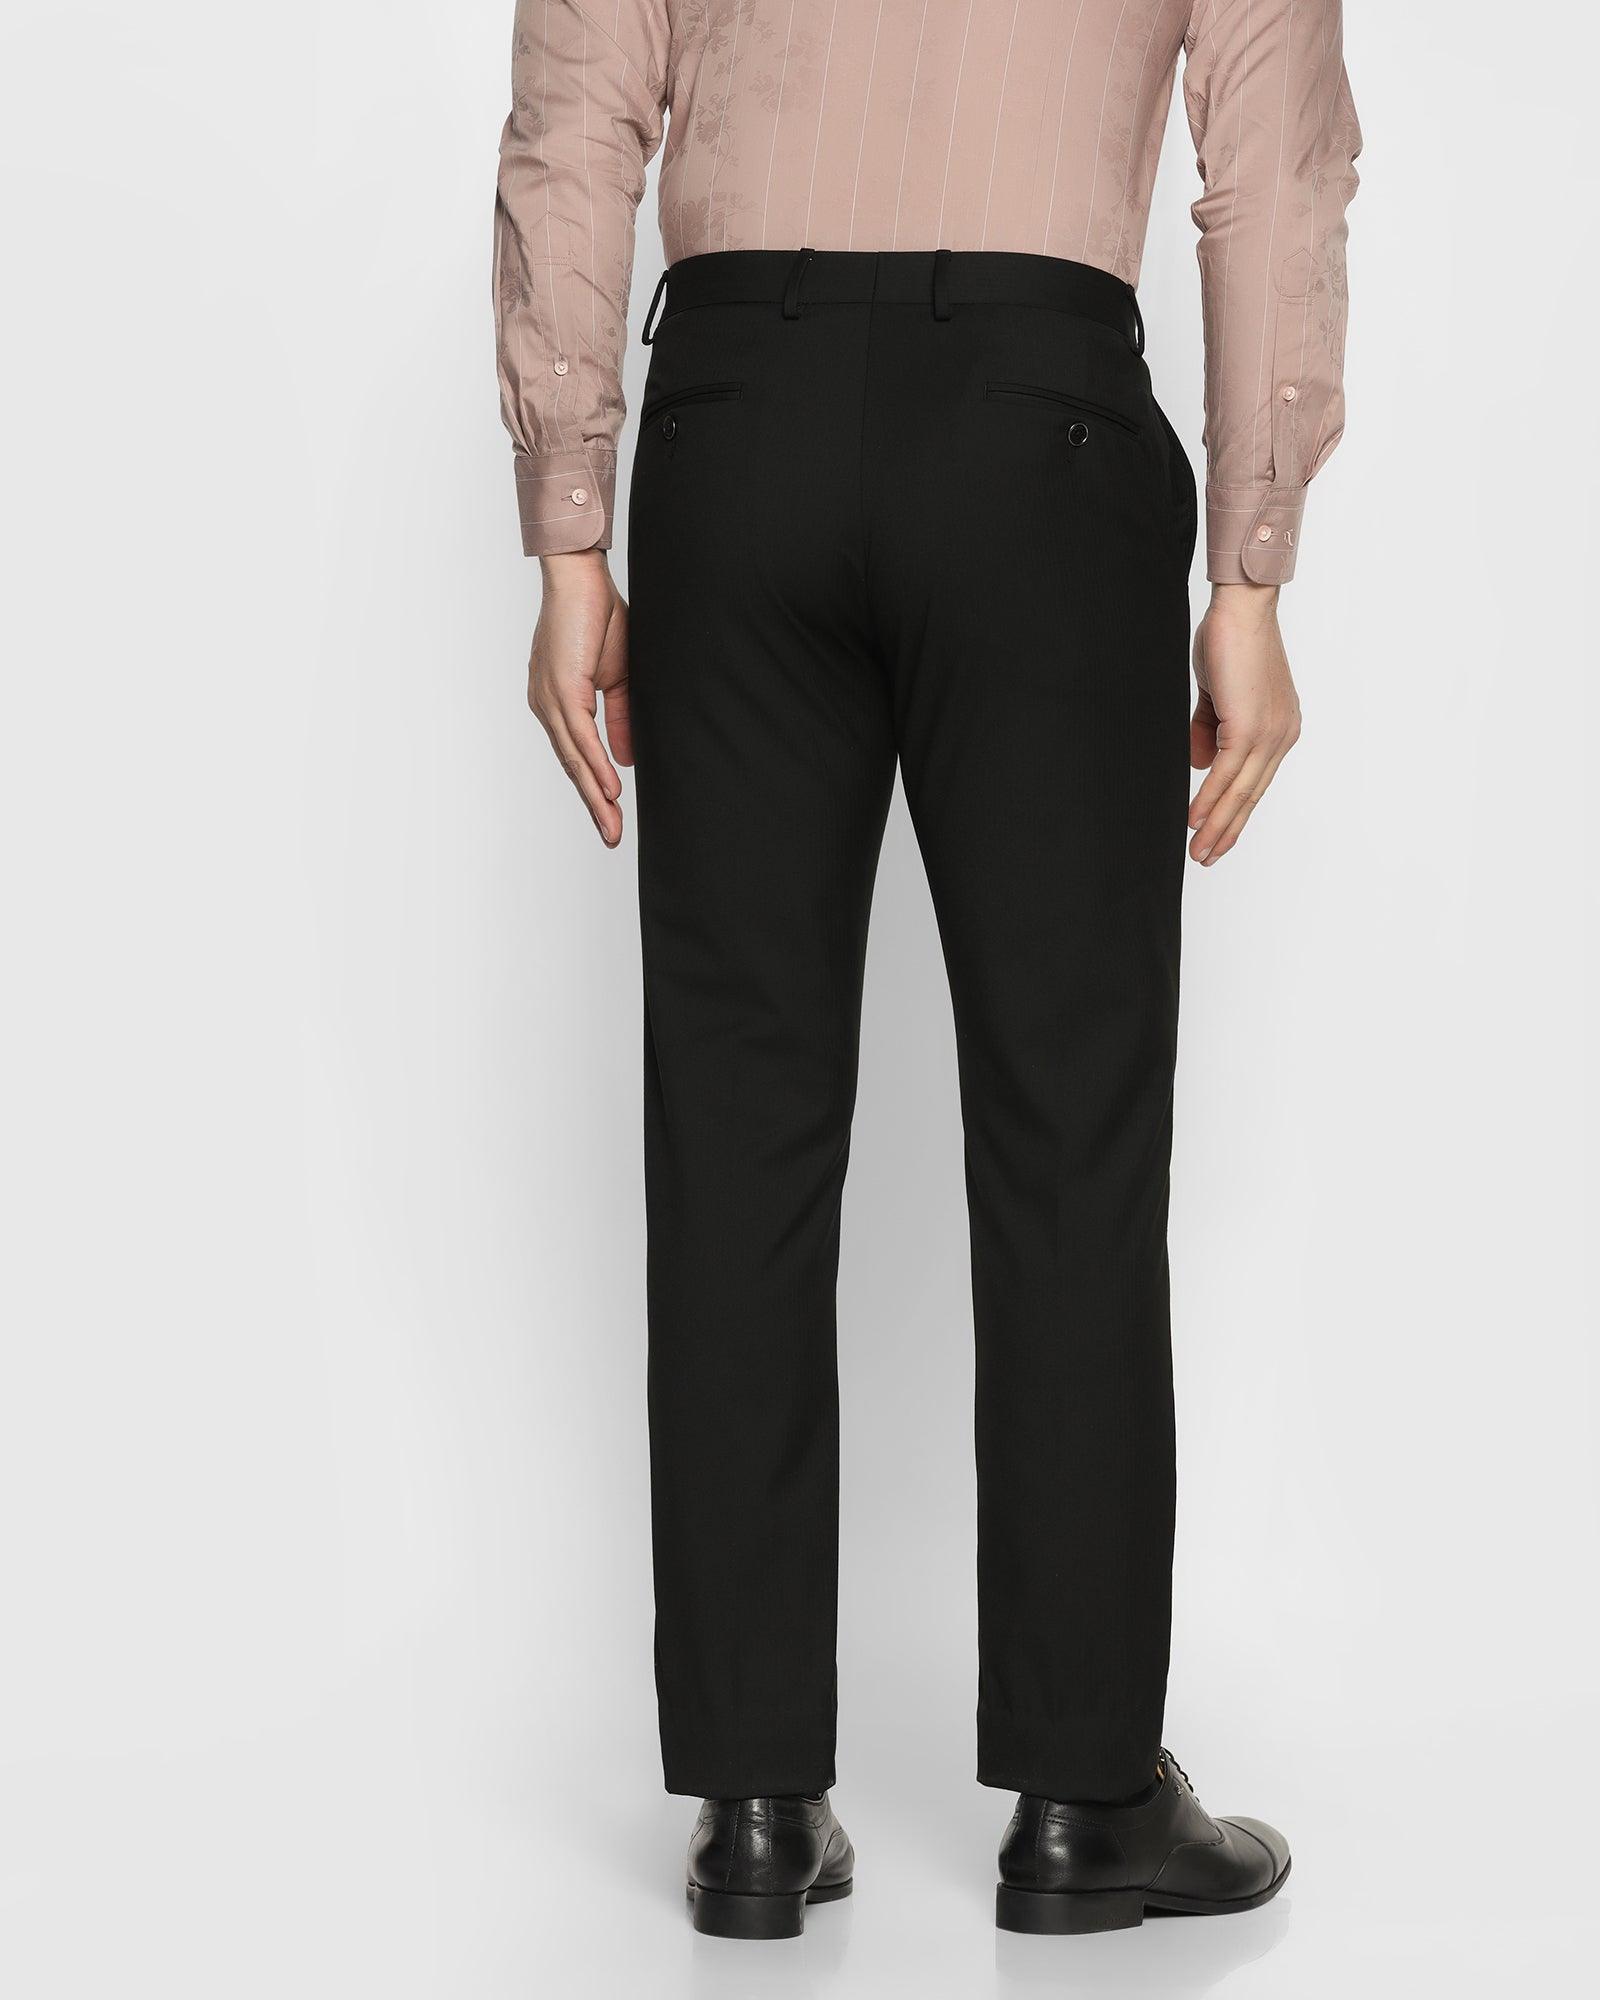 Slim Fit B-91 Formal Black Striped Trouser - Lues